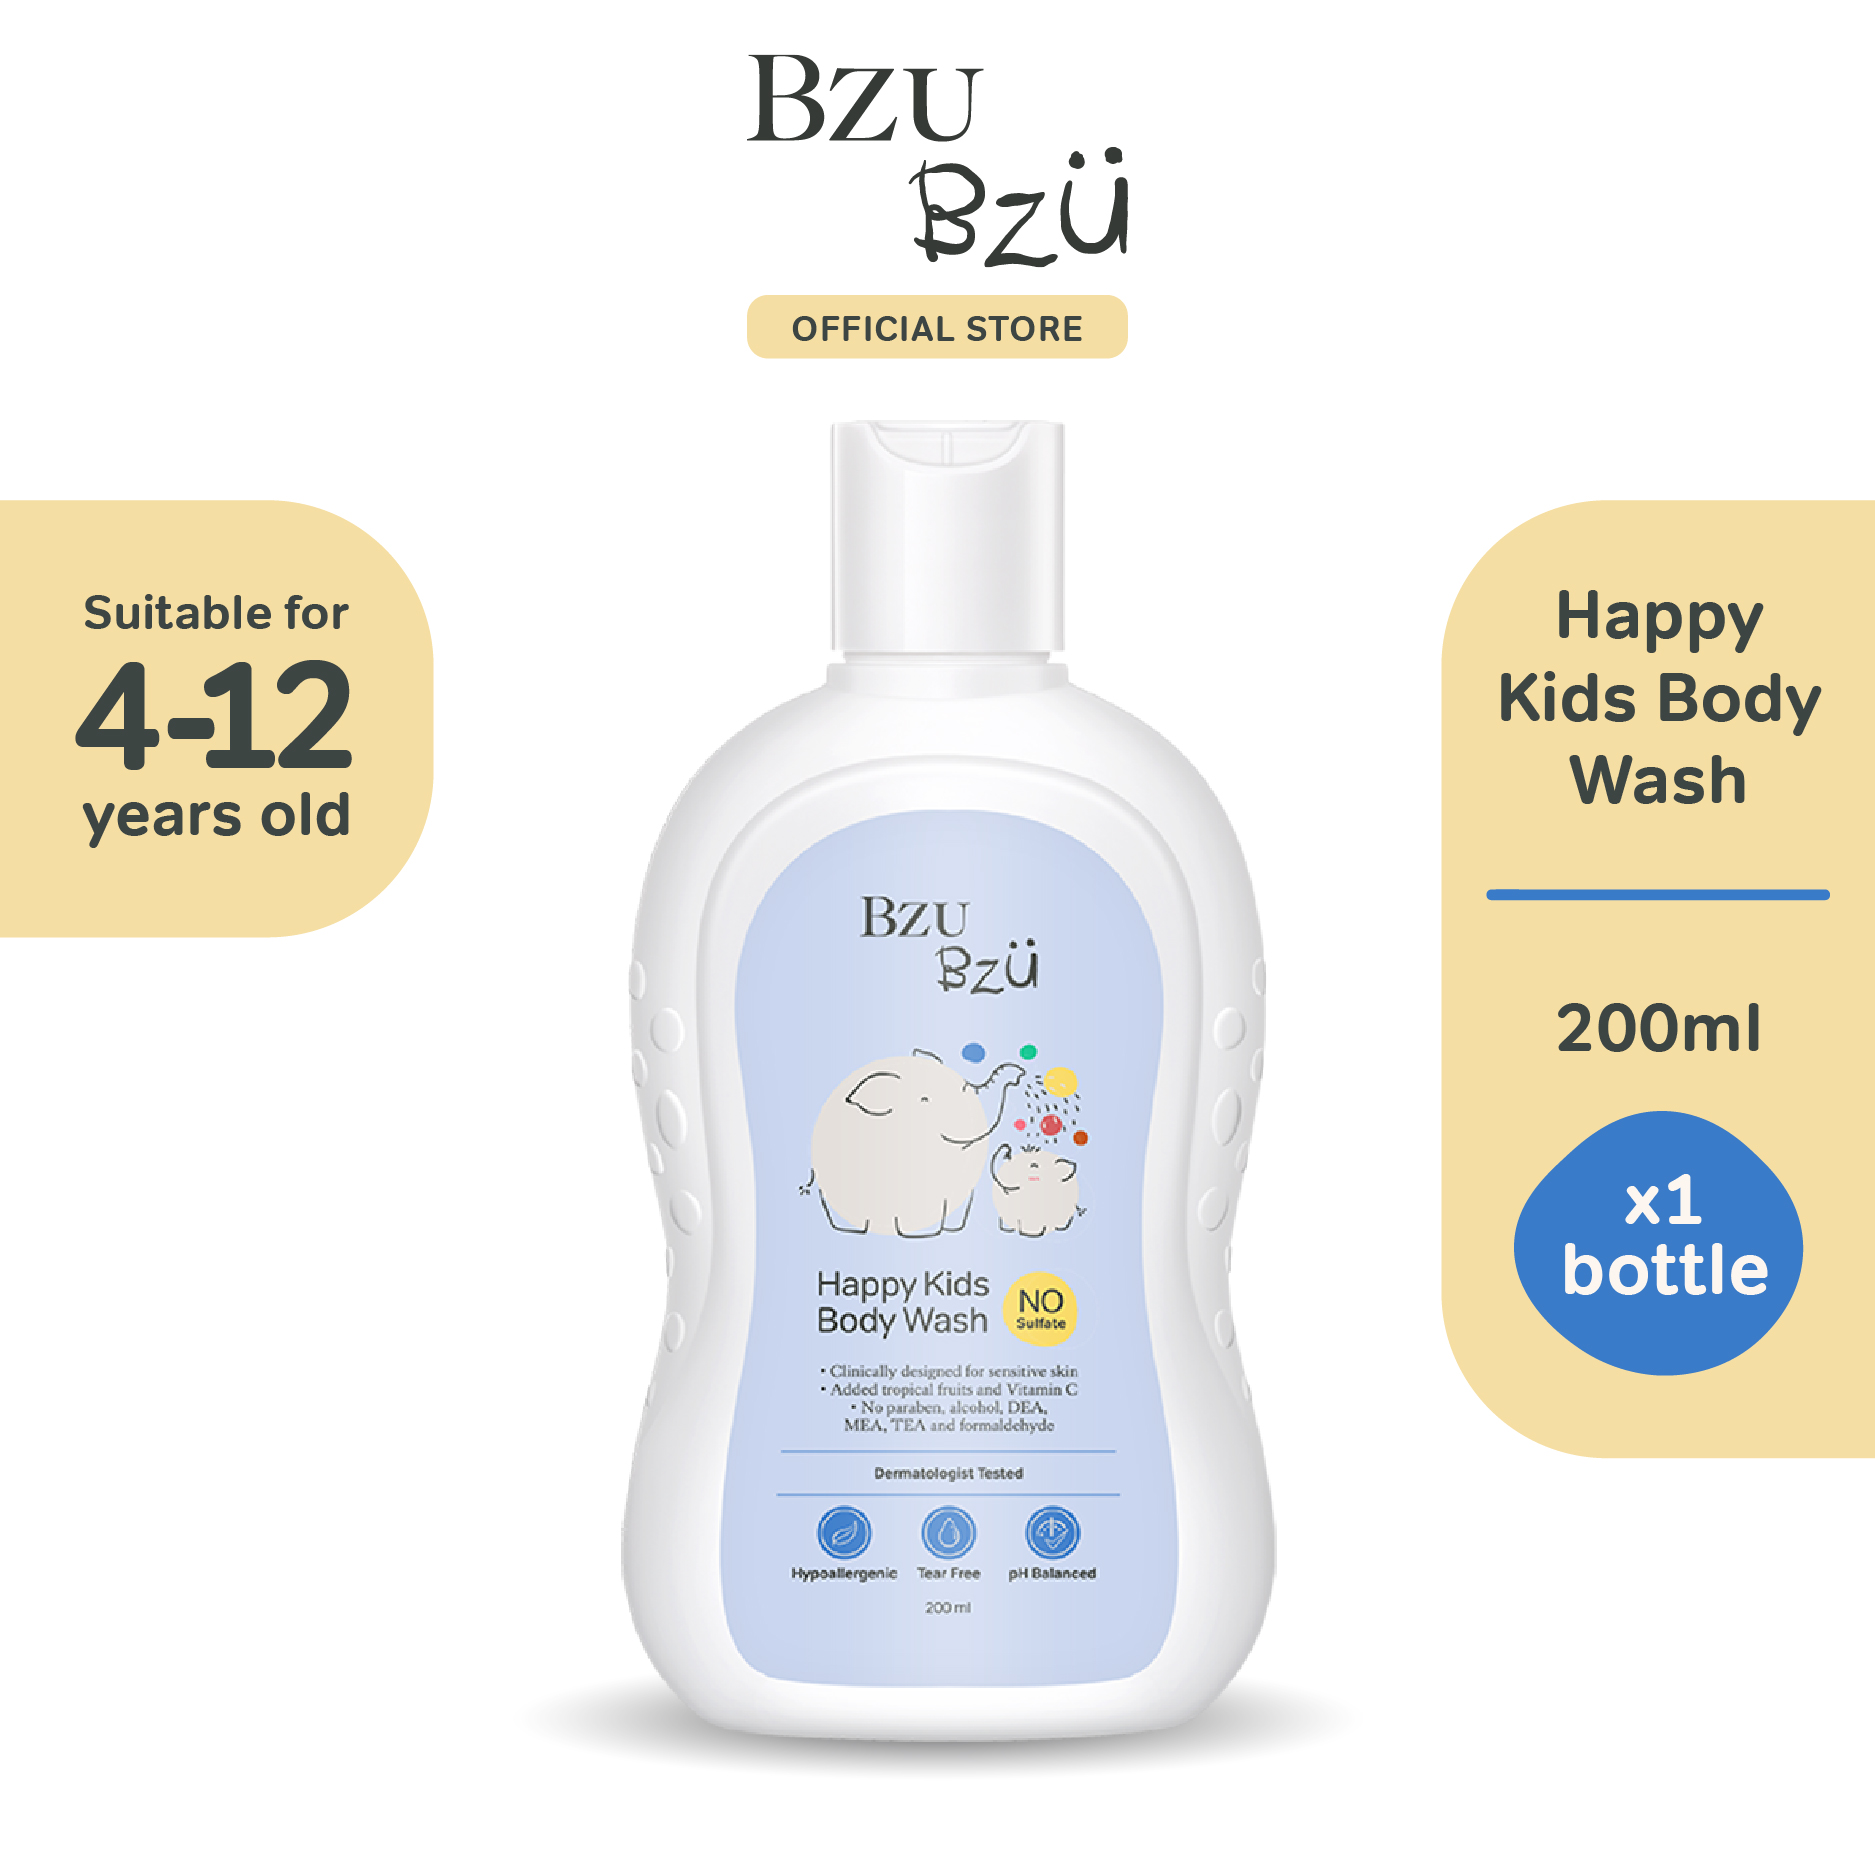 baby-fair Bzu Bzu Happy Kids Body Wash 200ml